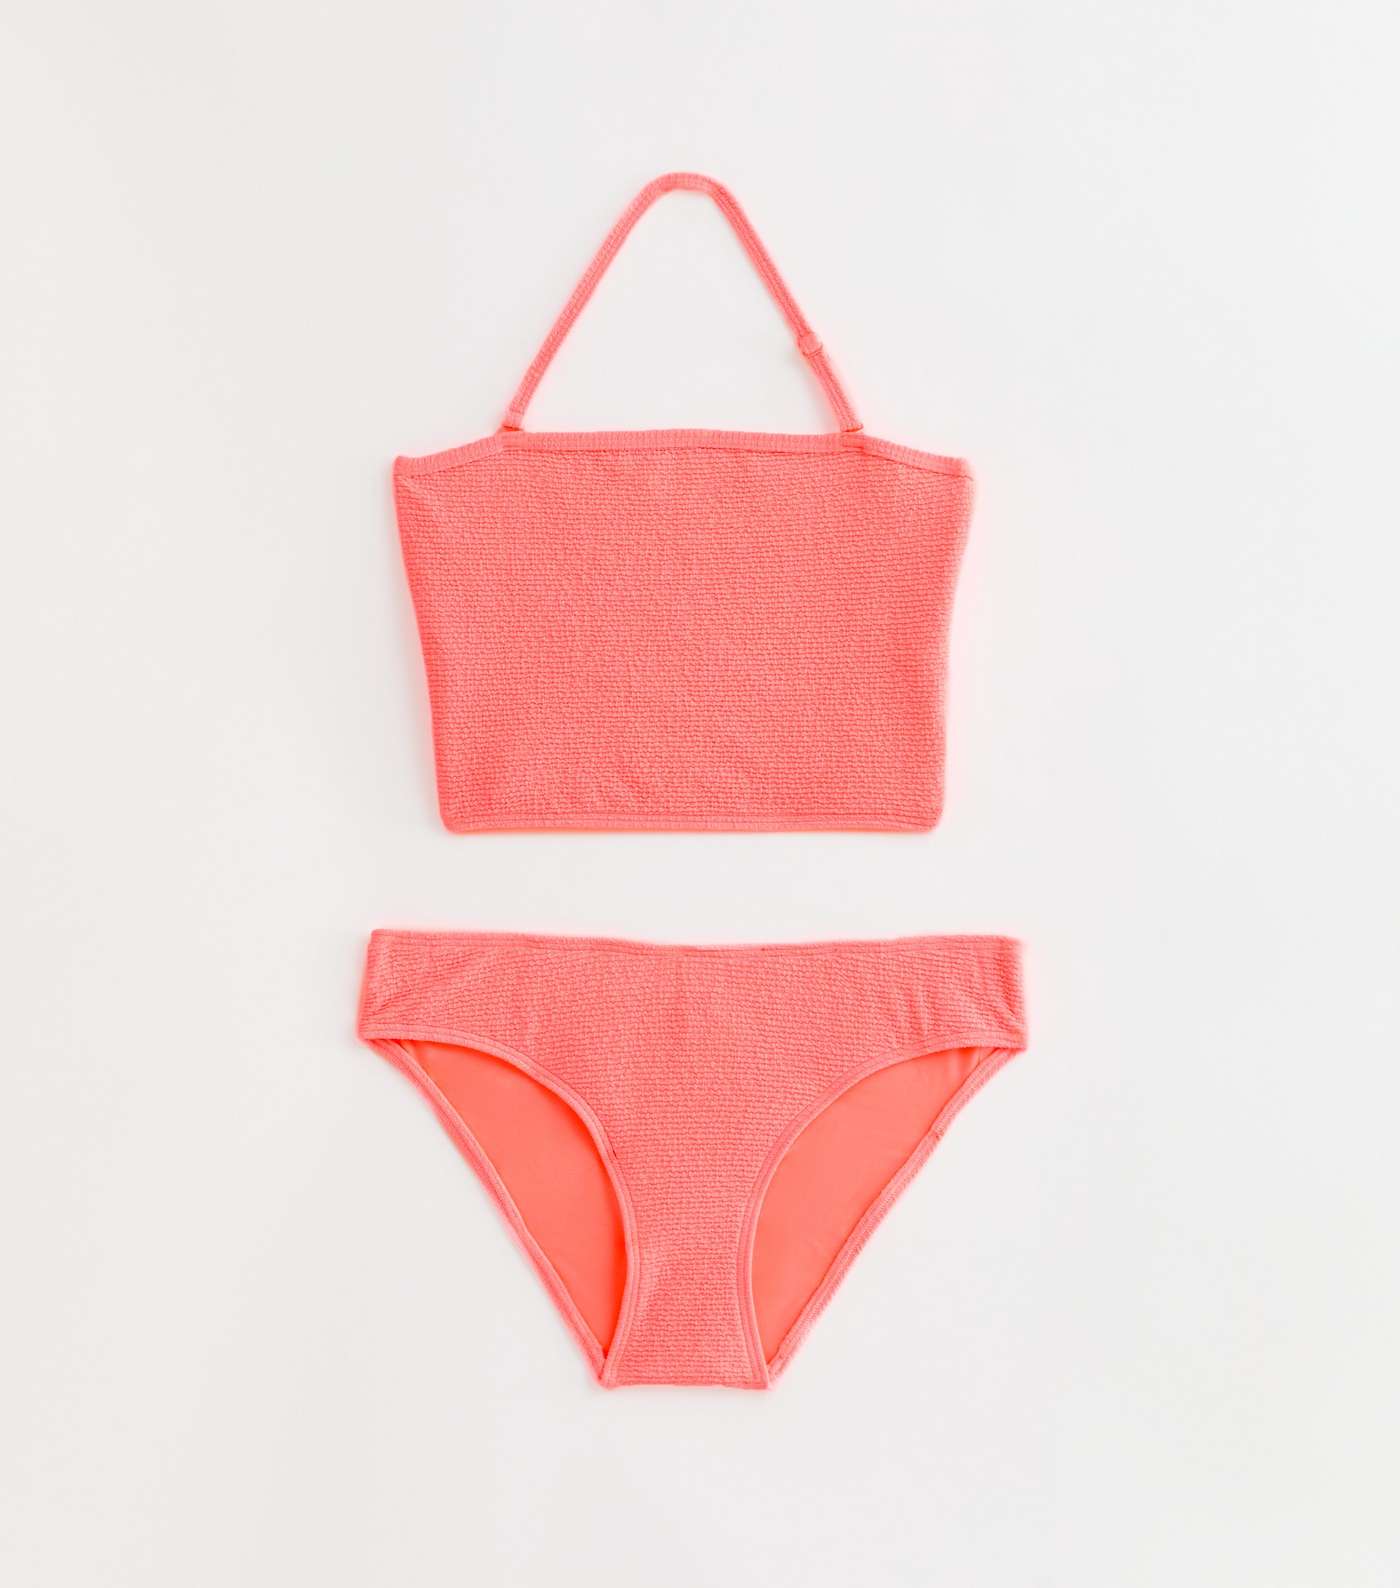 Girls Neon Coral Textured Bandeau Bikini Set